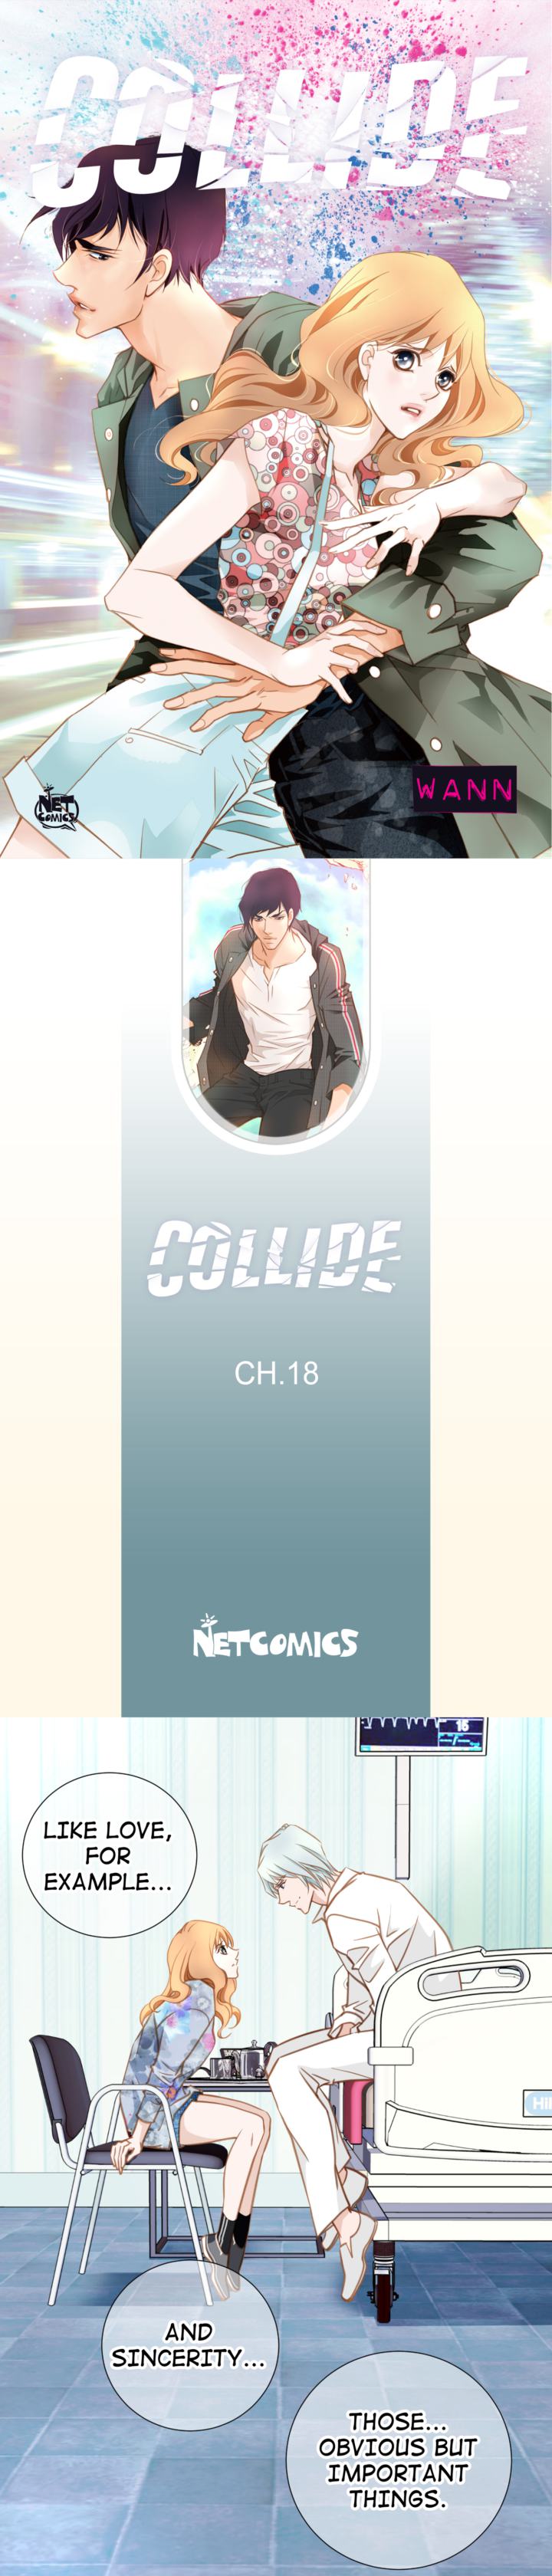 Collide Ch.18